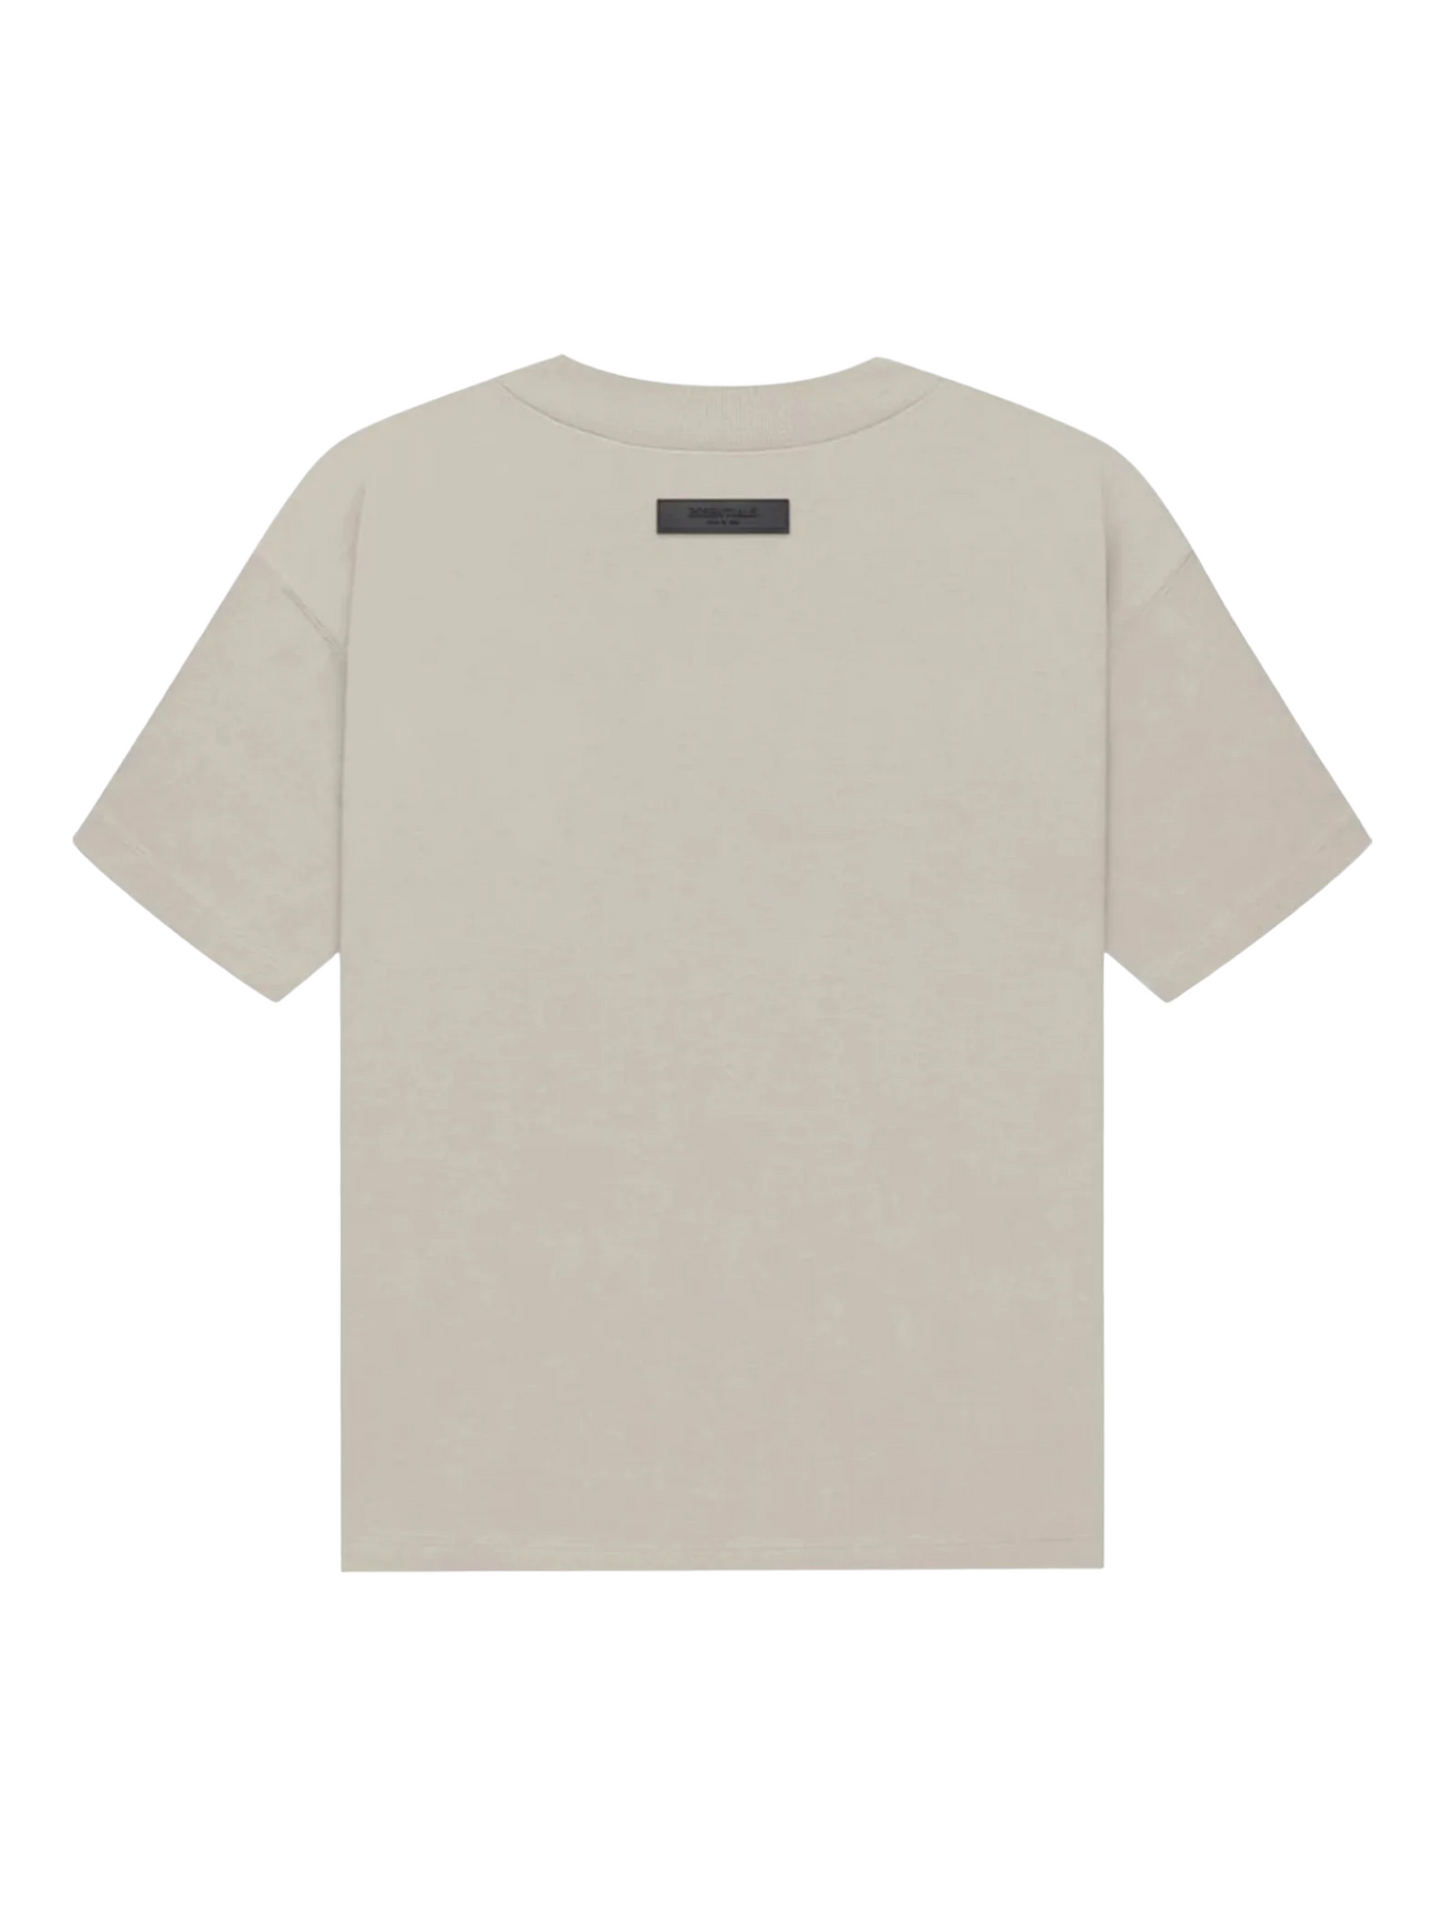 Essentials Fear of God Seal Short Sleeve T-Shirt FW22